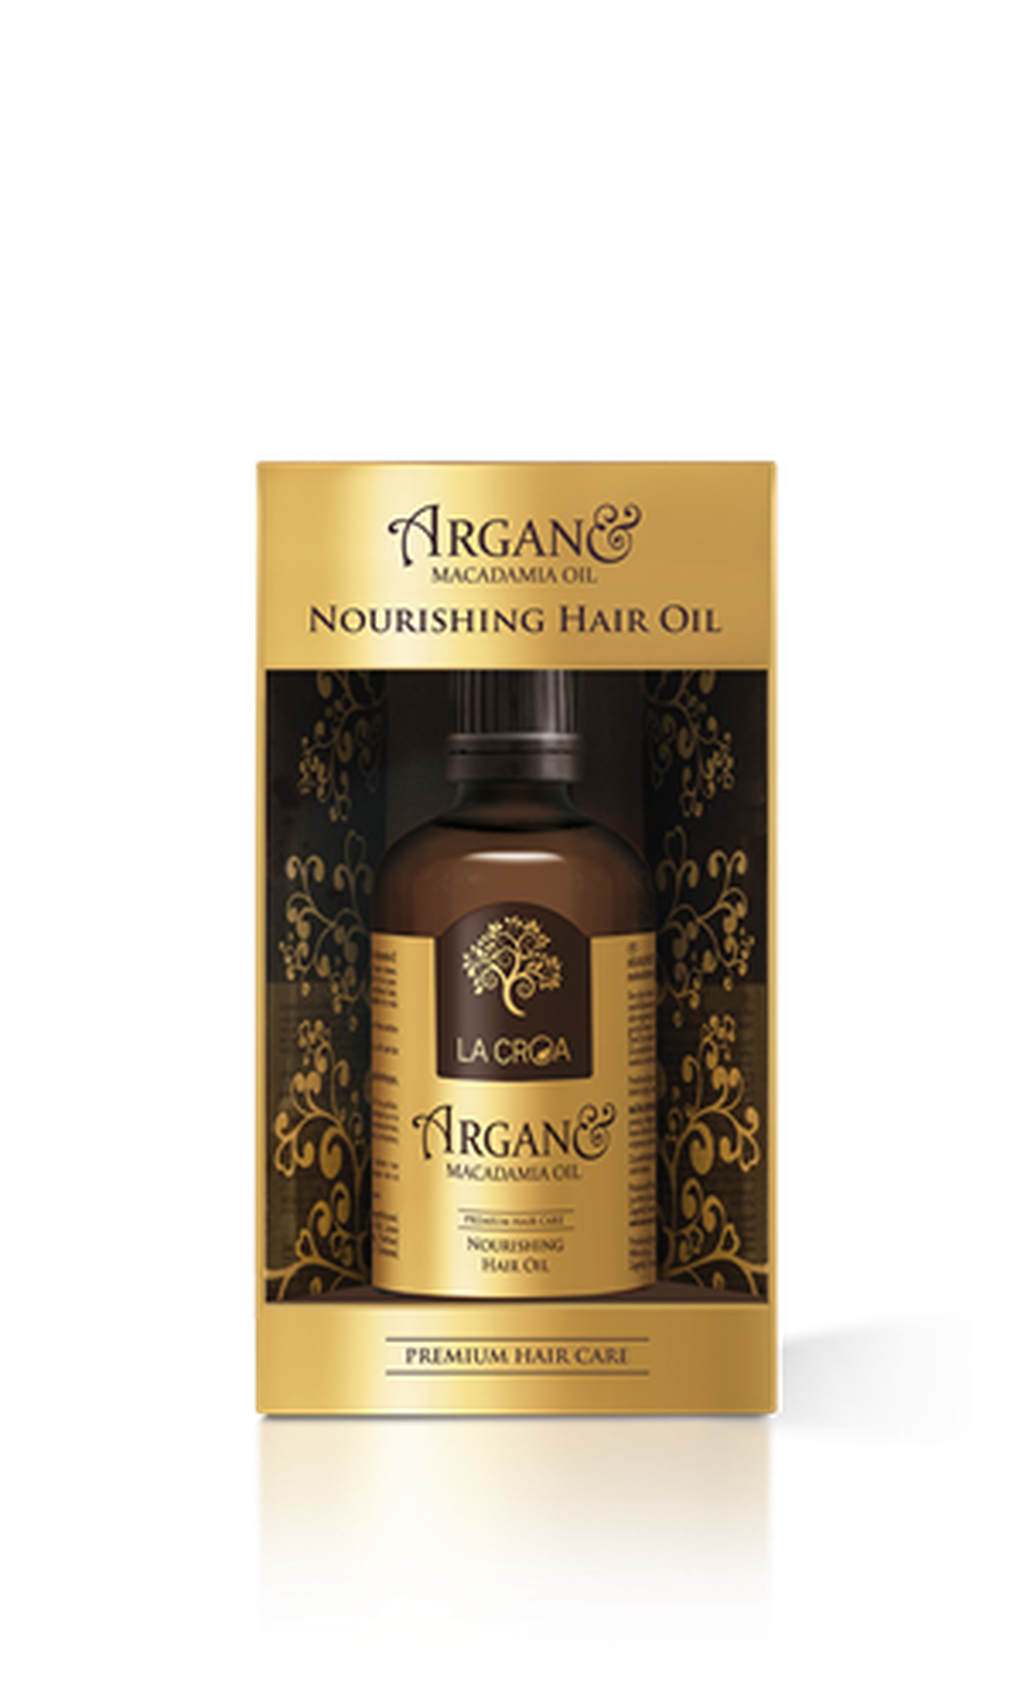 Argan nourishing hair oil